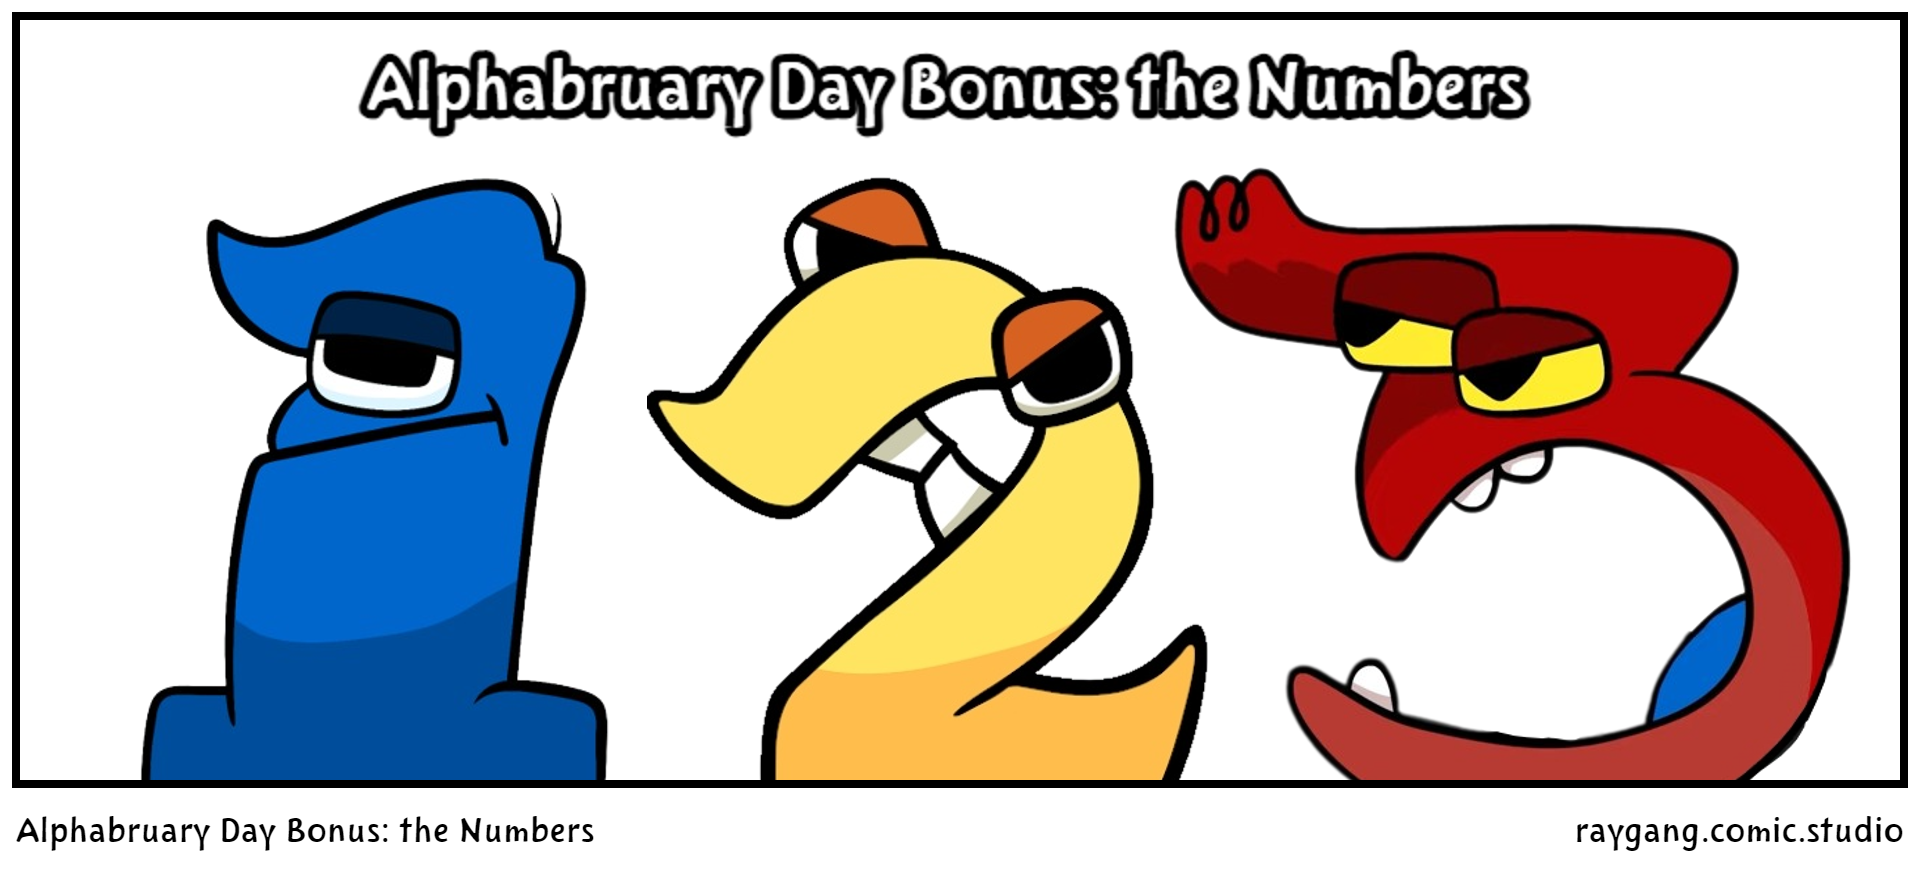 Alphabruary Day Bonus: the Numbers